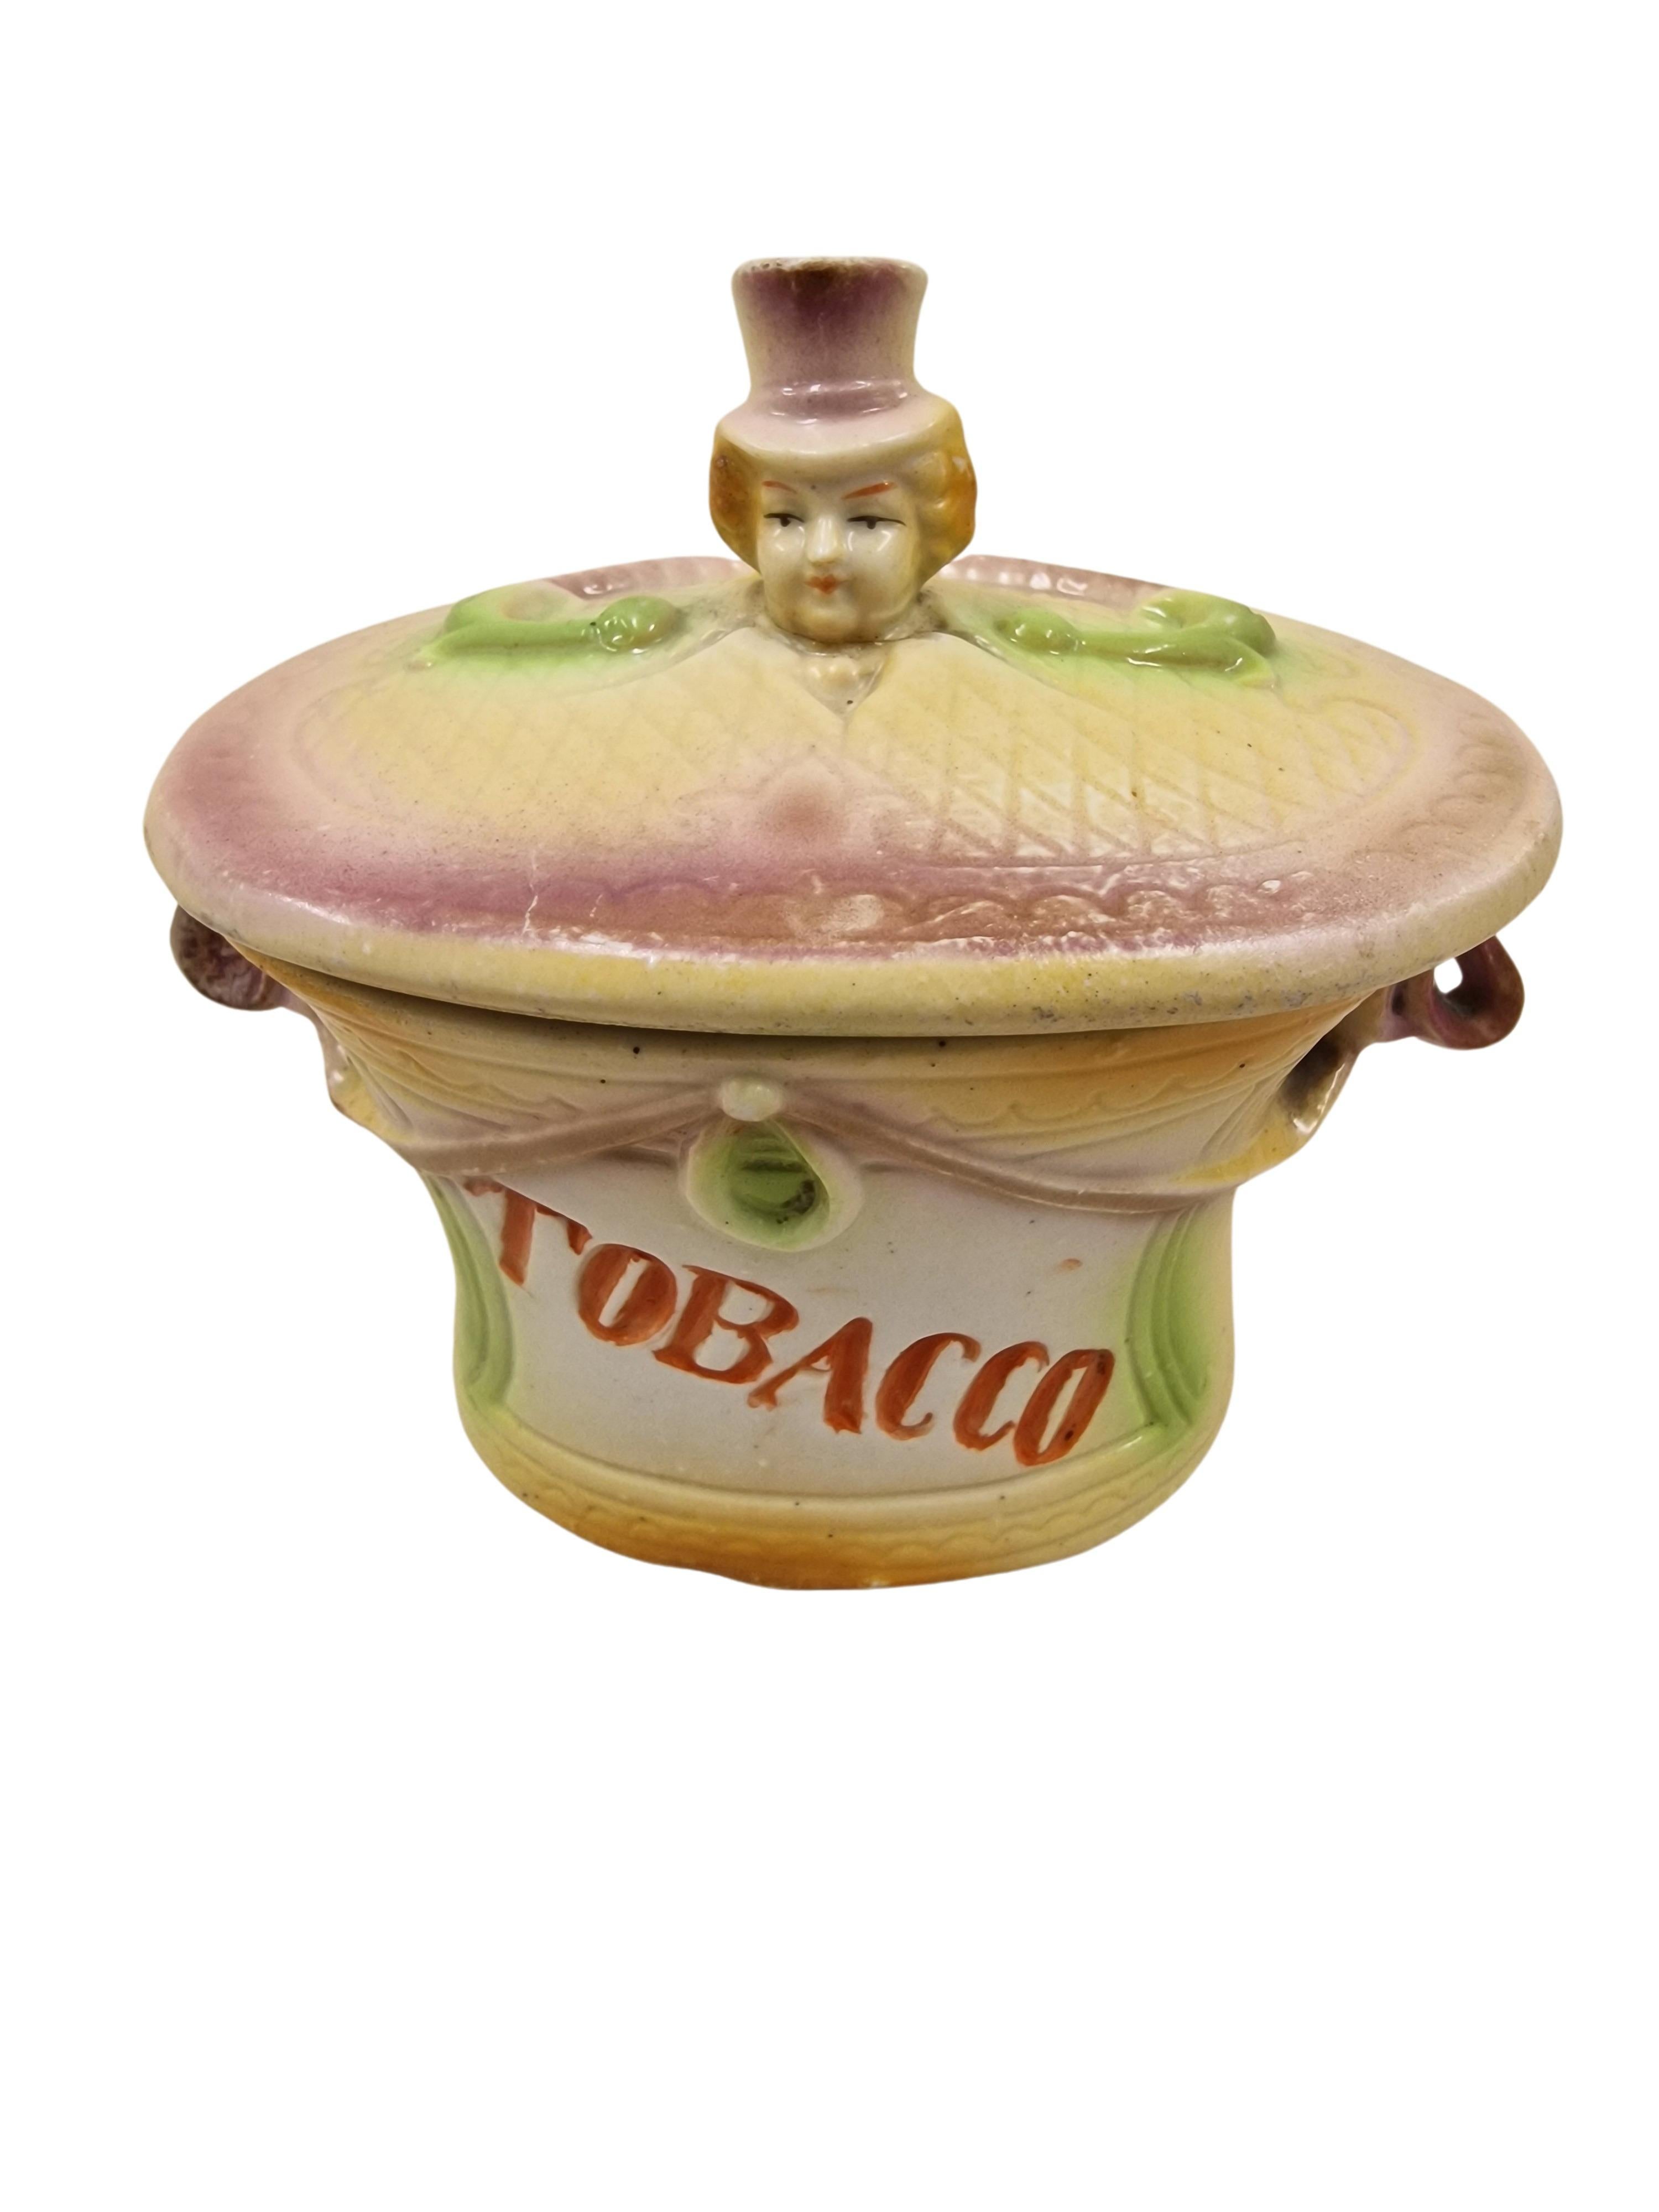 Charming tobacco box tin, bisque porcelain, smoking, 1900 Art Nouveau, England For Sale 2